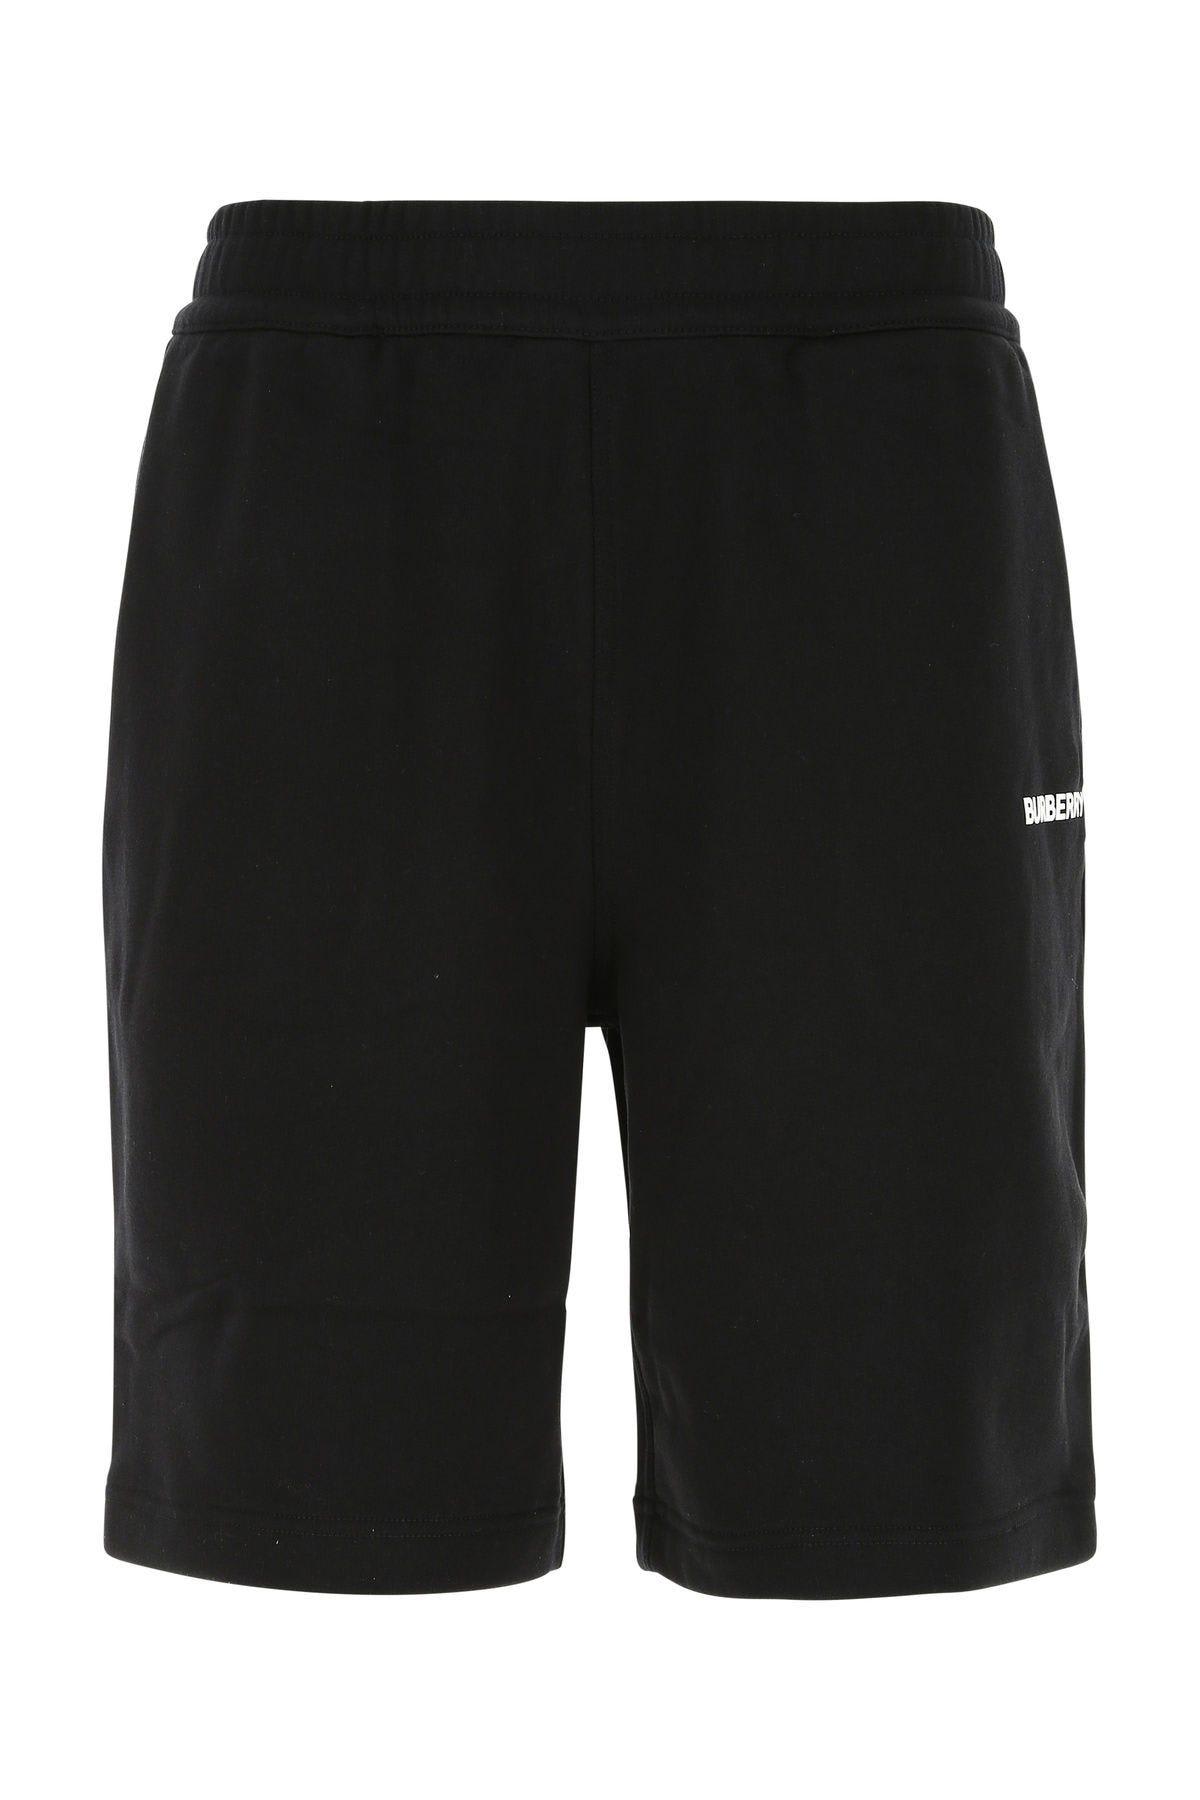 Burberry Black Cotton Bermuda Shorts